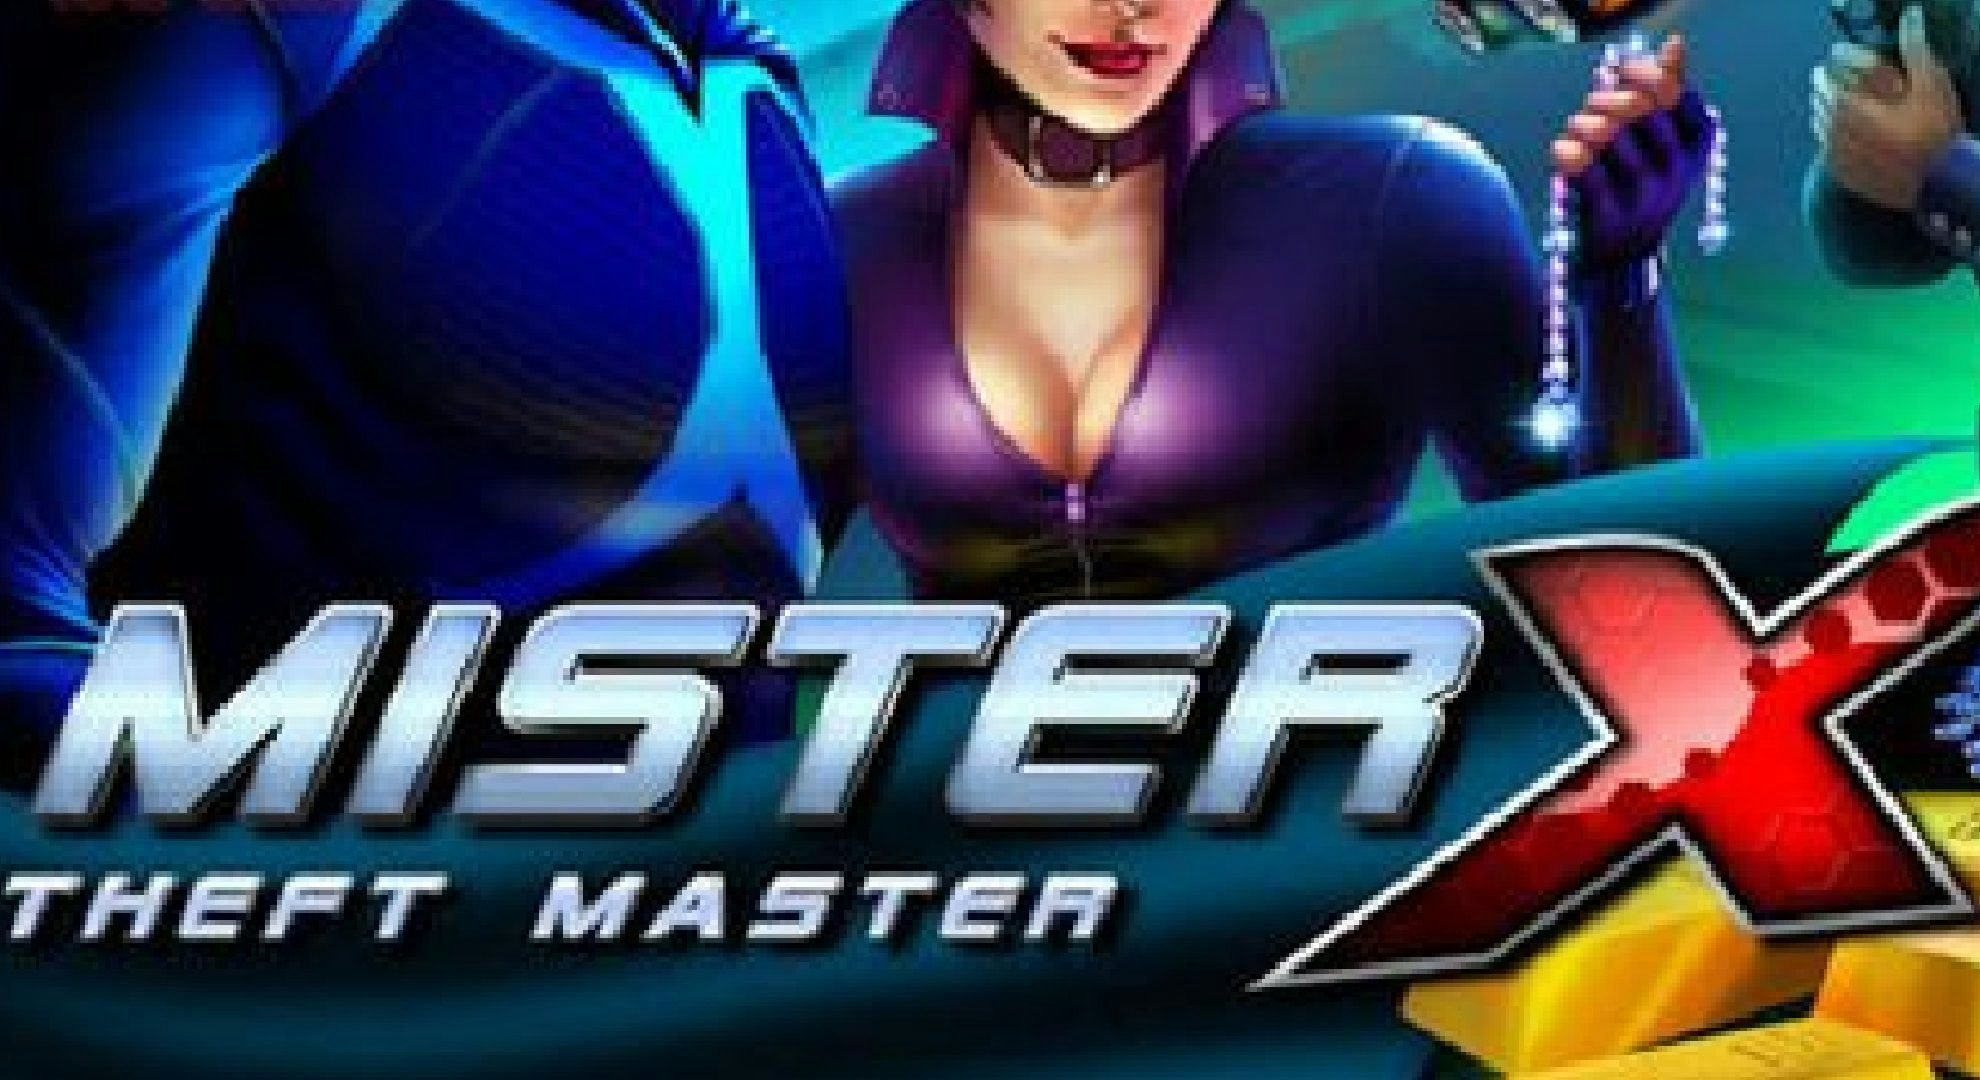 Mister X Theft Master